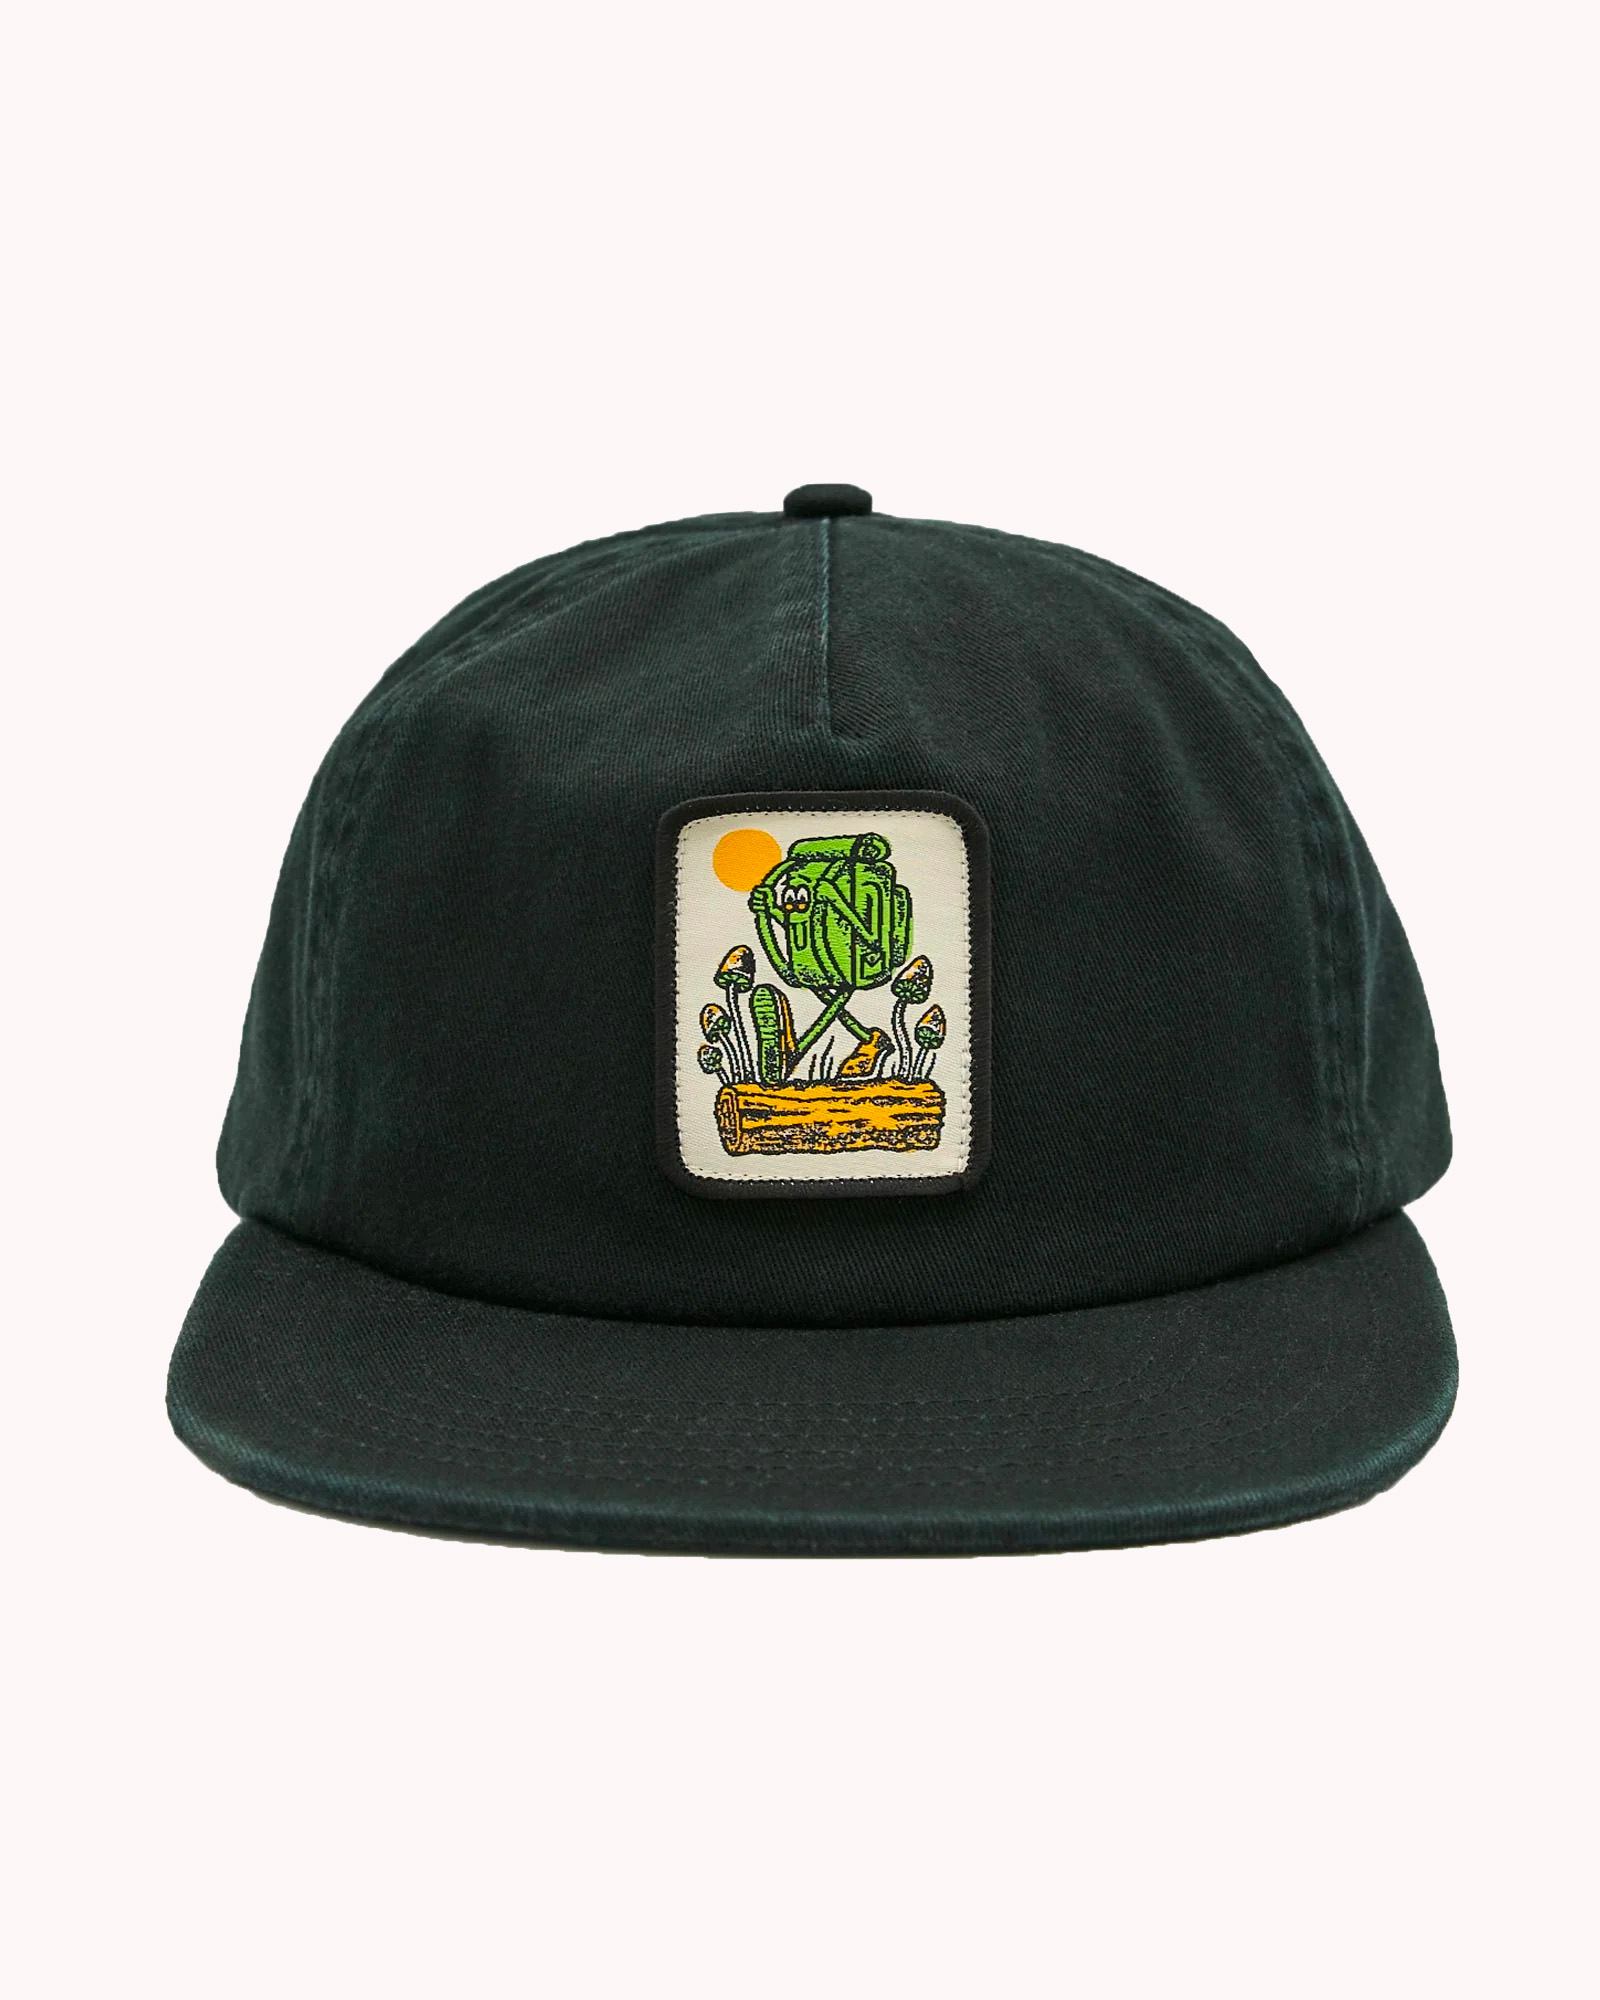 A black baseball cap with logo